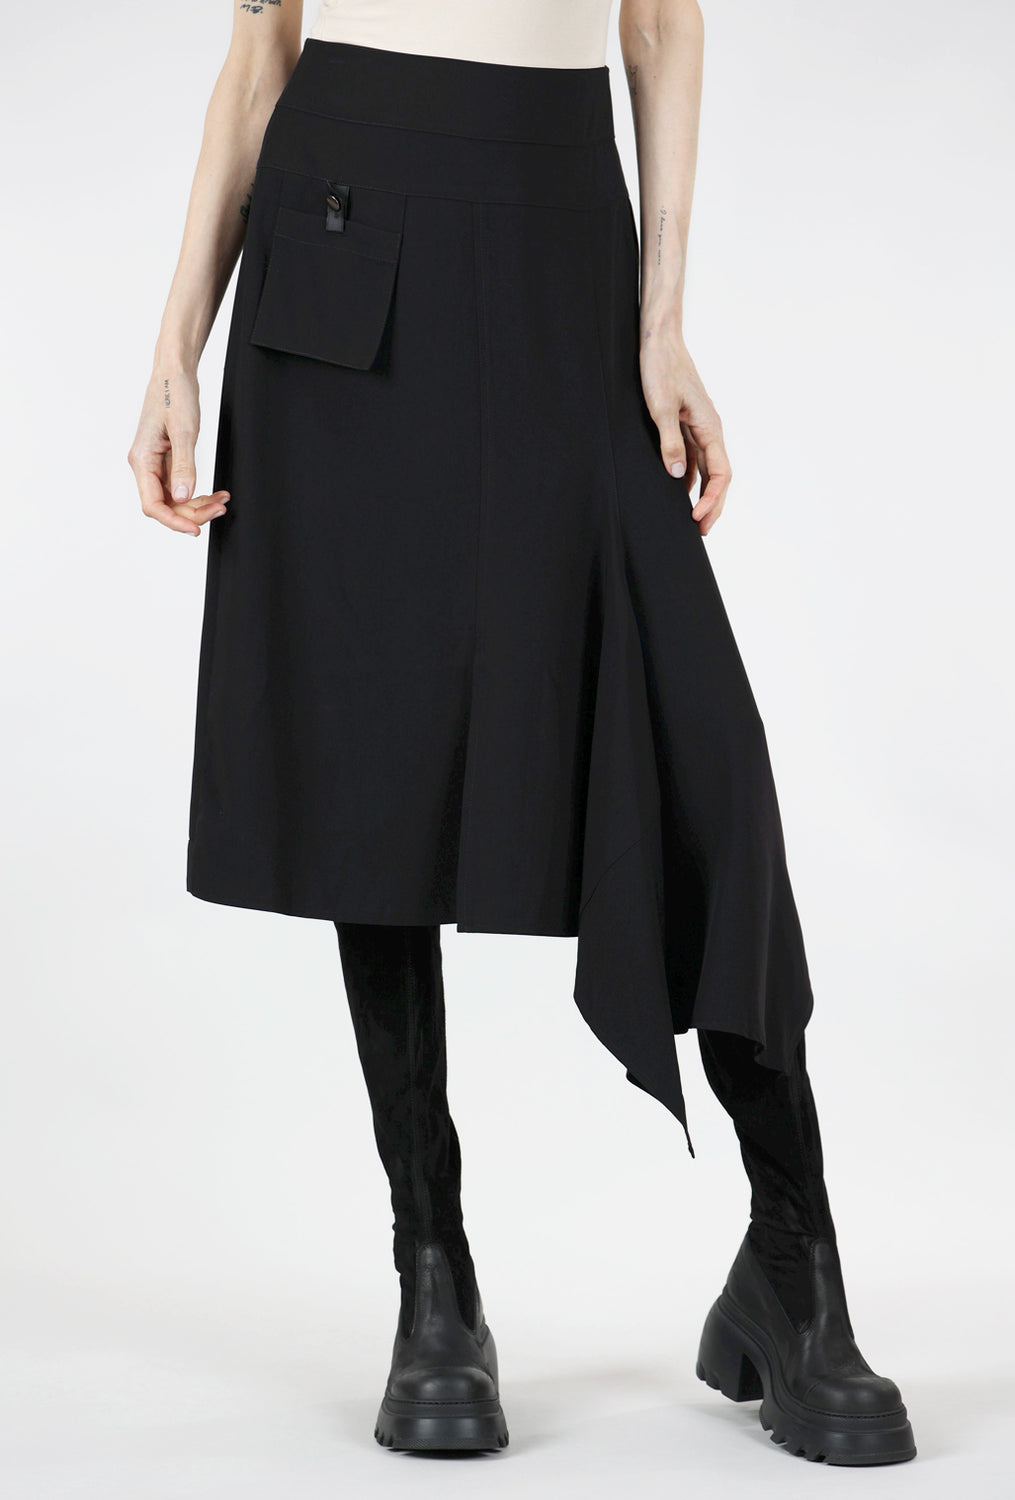 Peace of Cloth Becca Asym Skirt, Black 